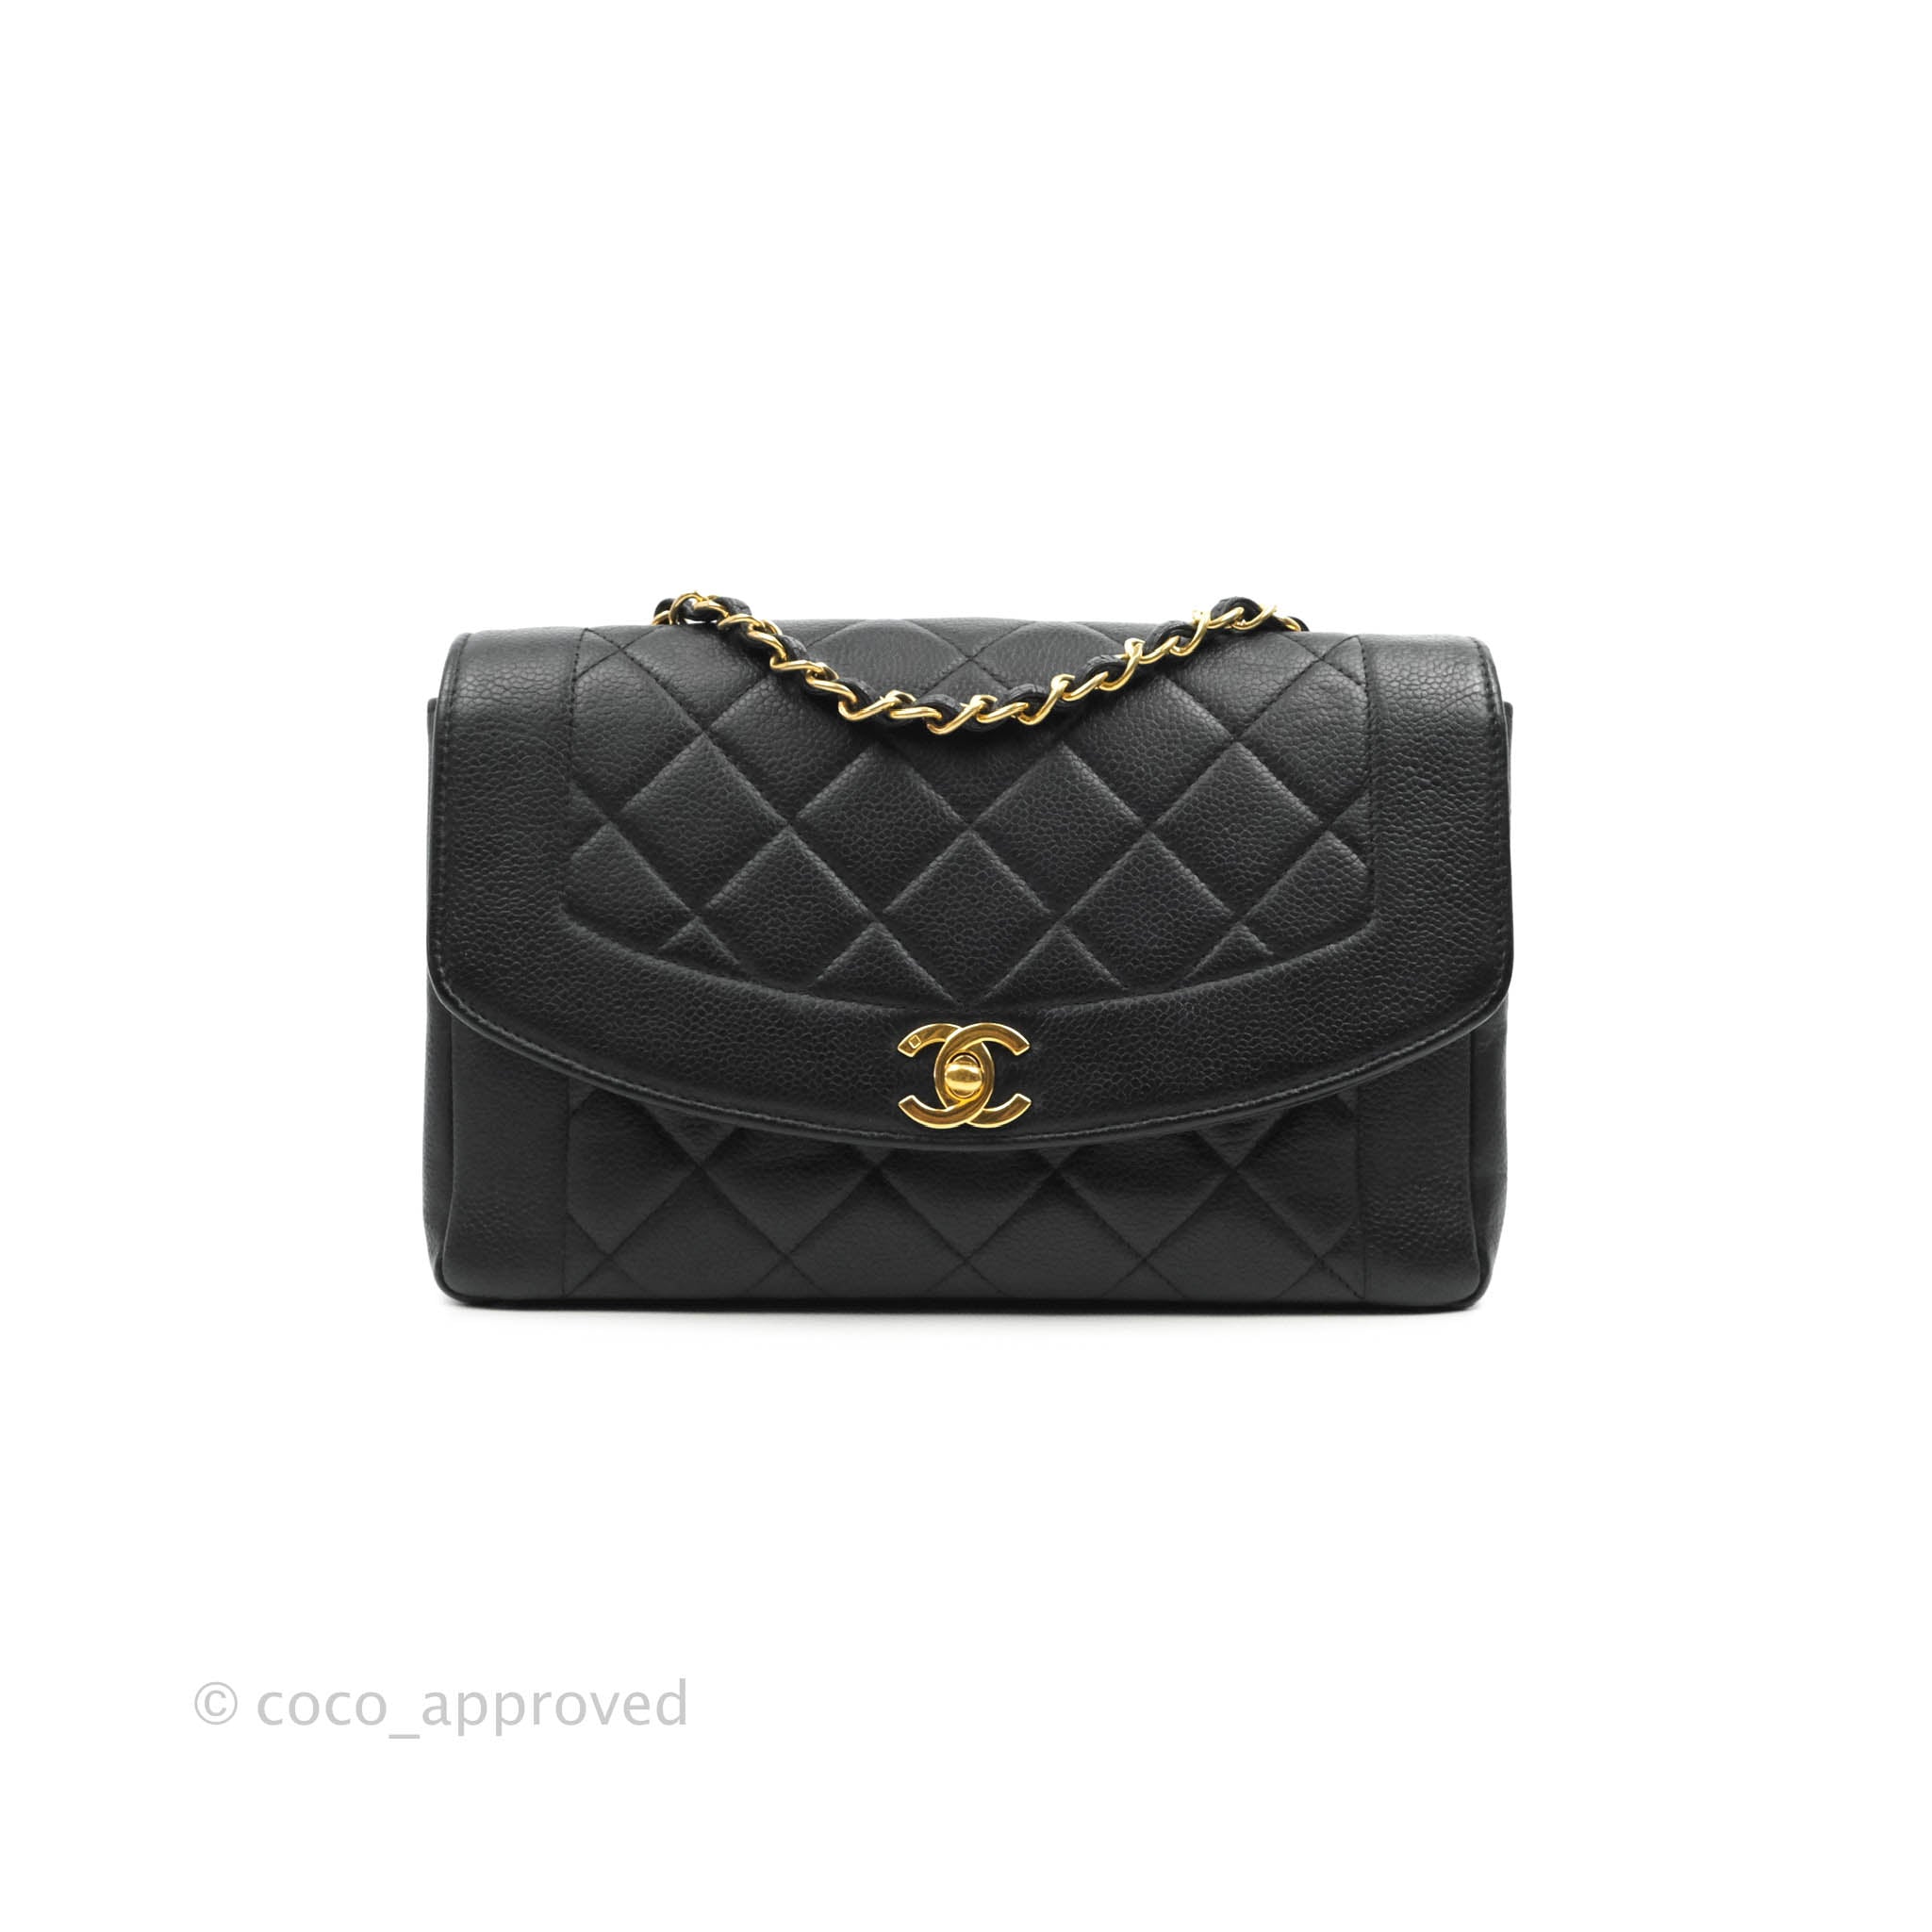 CHANEL Caviar Diana Classic Flap 24KT Gold Hardware Handbag